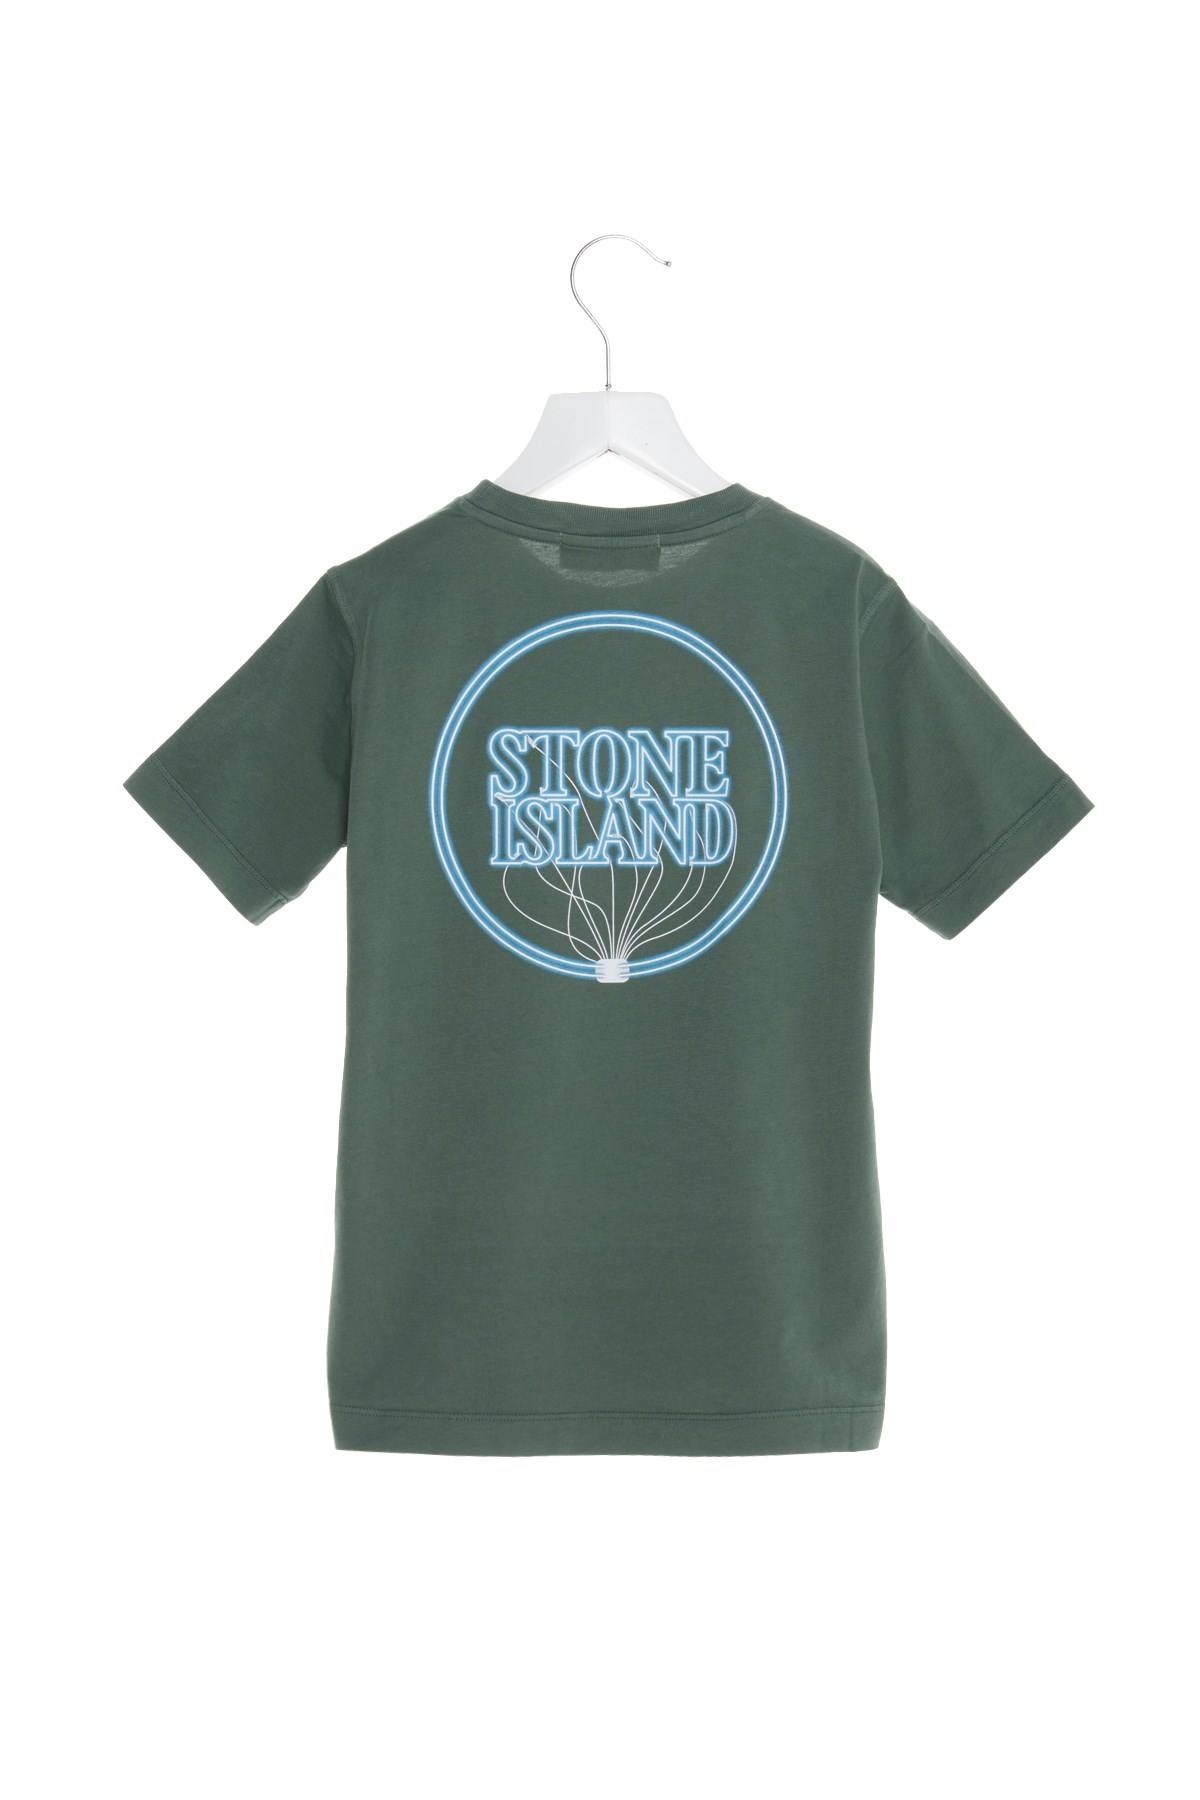 STONE ISLAND JUNIOR Back Print T-Shirt